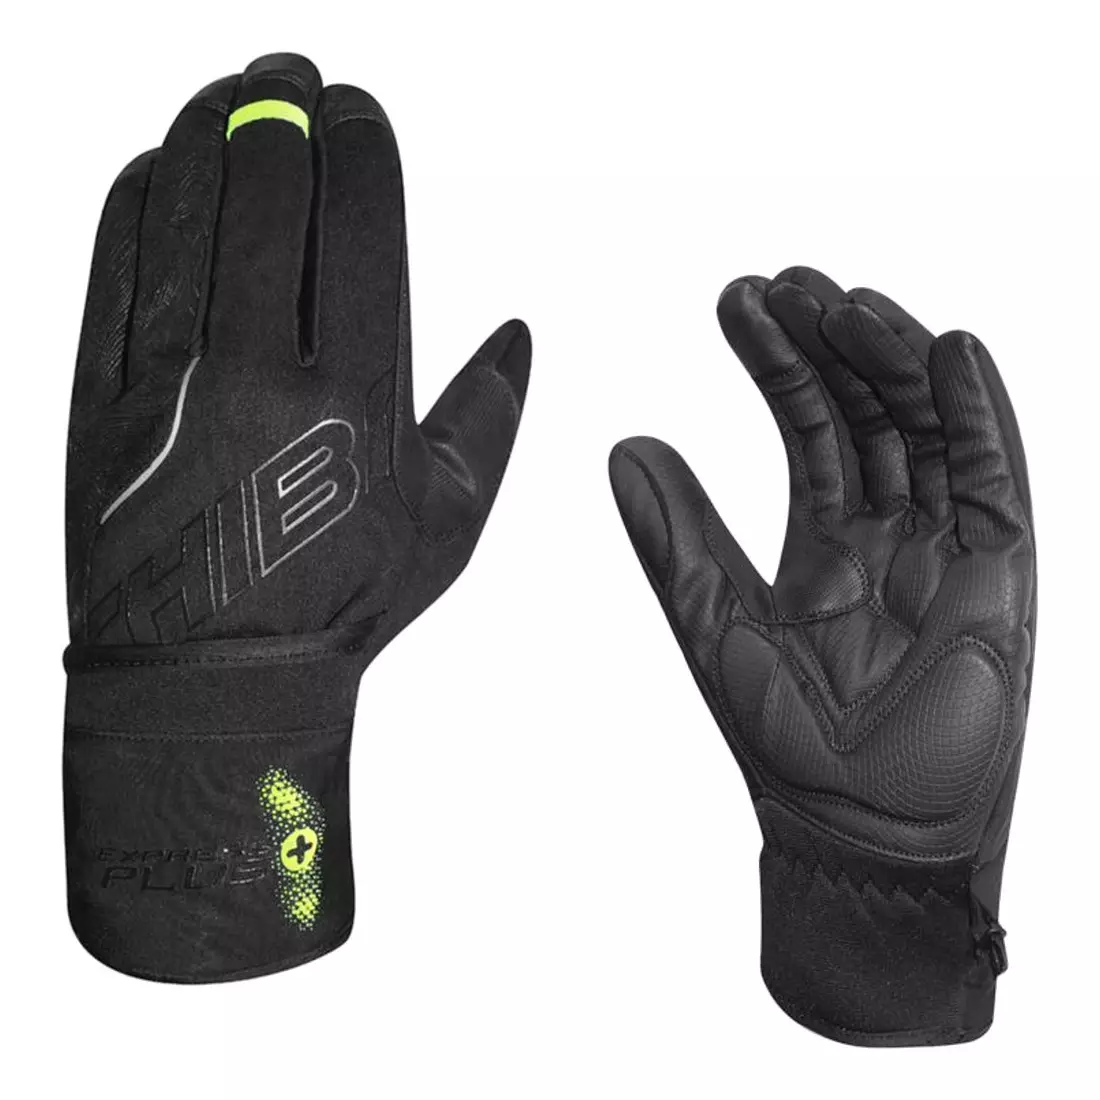 CHIBA EXPRESS+ pánske zimné cyklistické rukavice, čierna